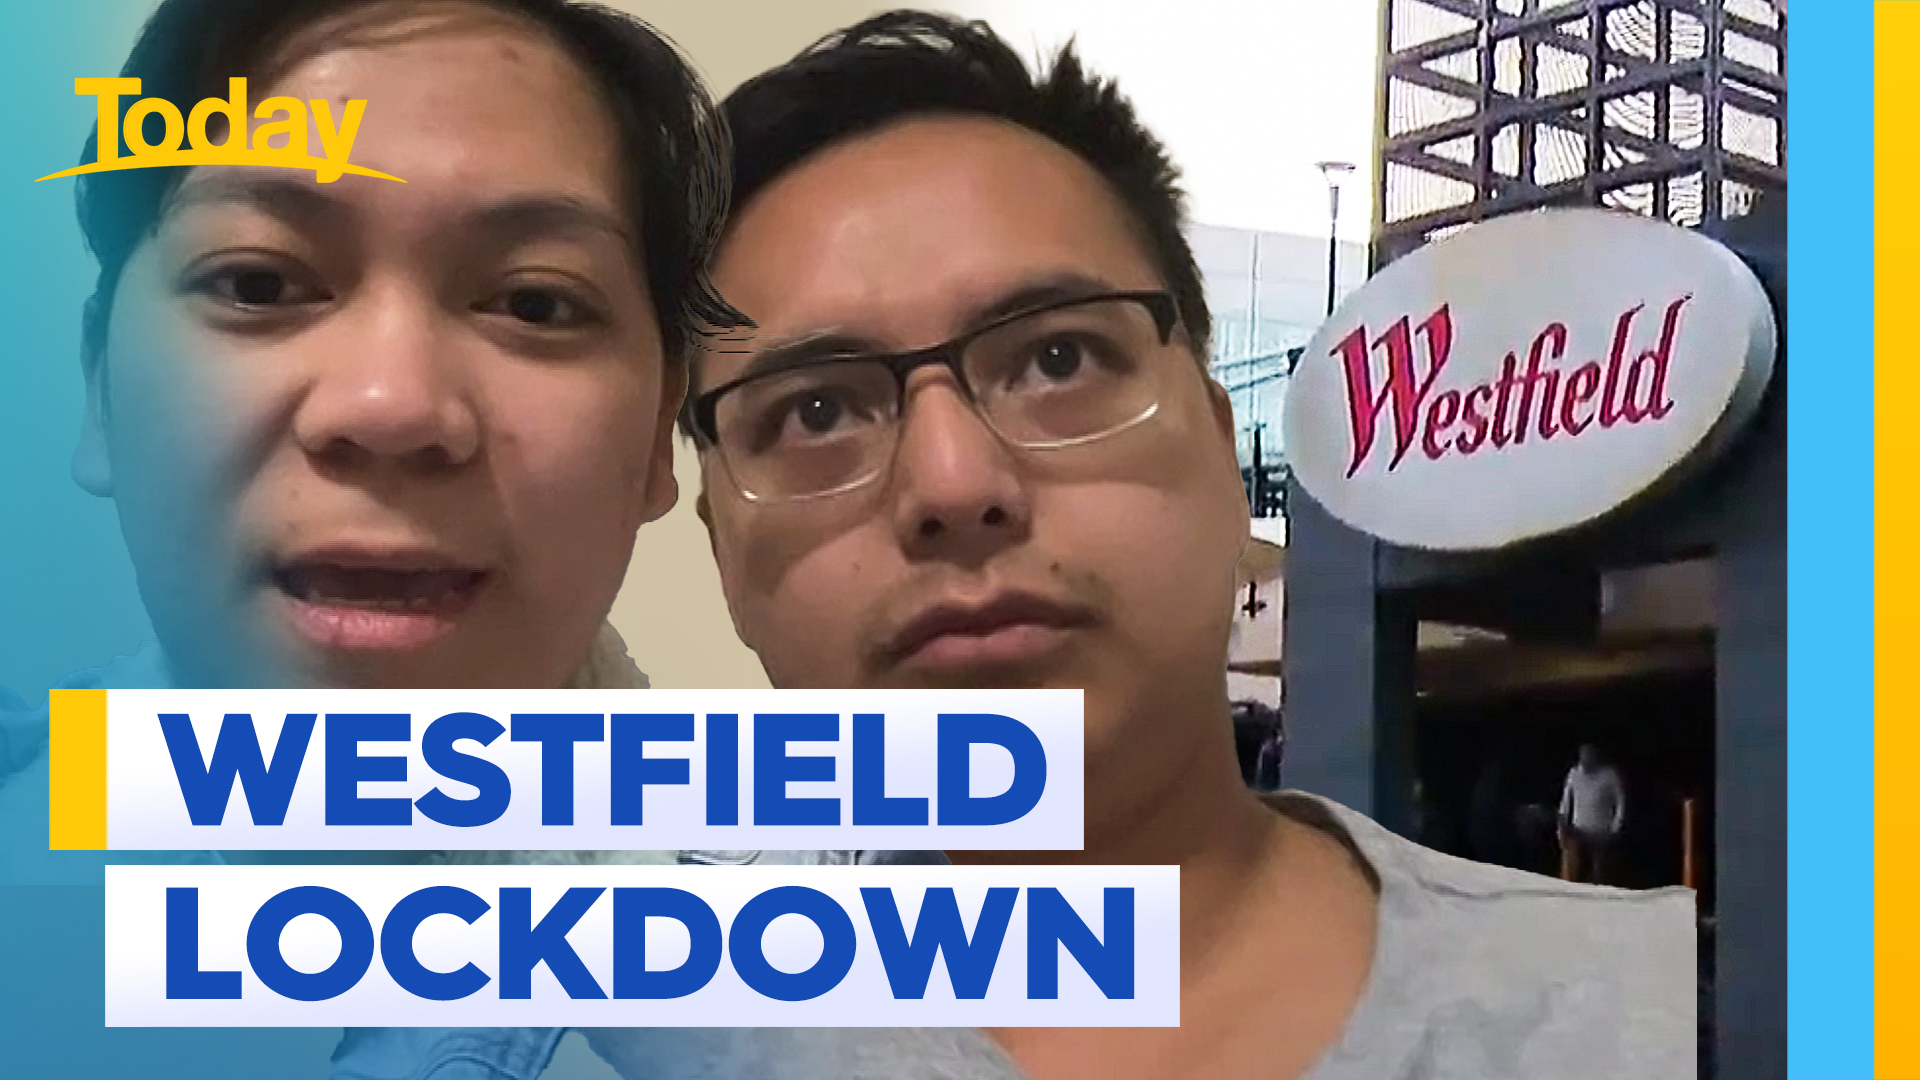 Witnesses recount terrifying lockdown at Adelaide shopping centre